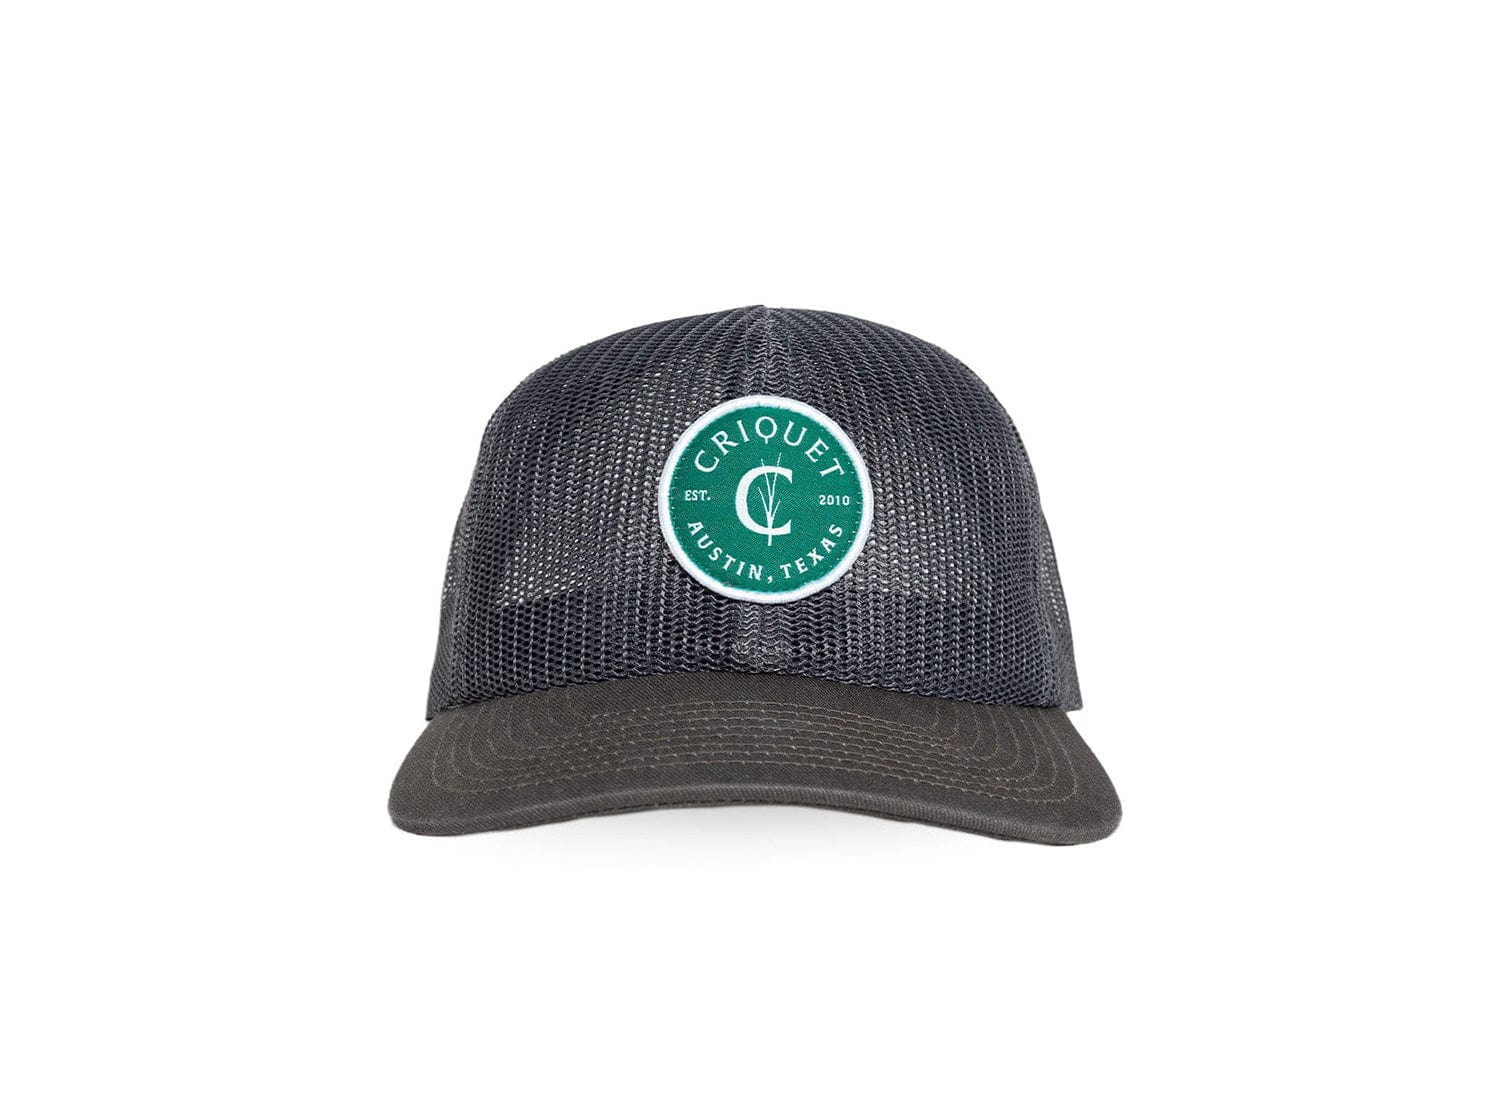 All Mesh Trucker Hat - Criquet Badge - Gray - Secondary